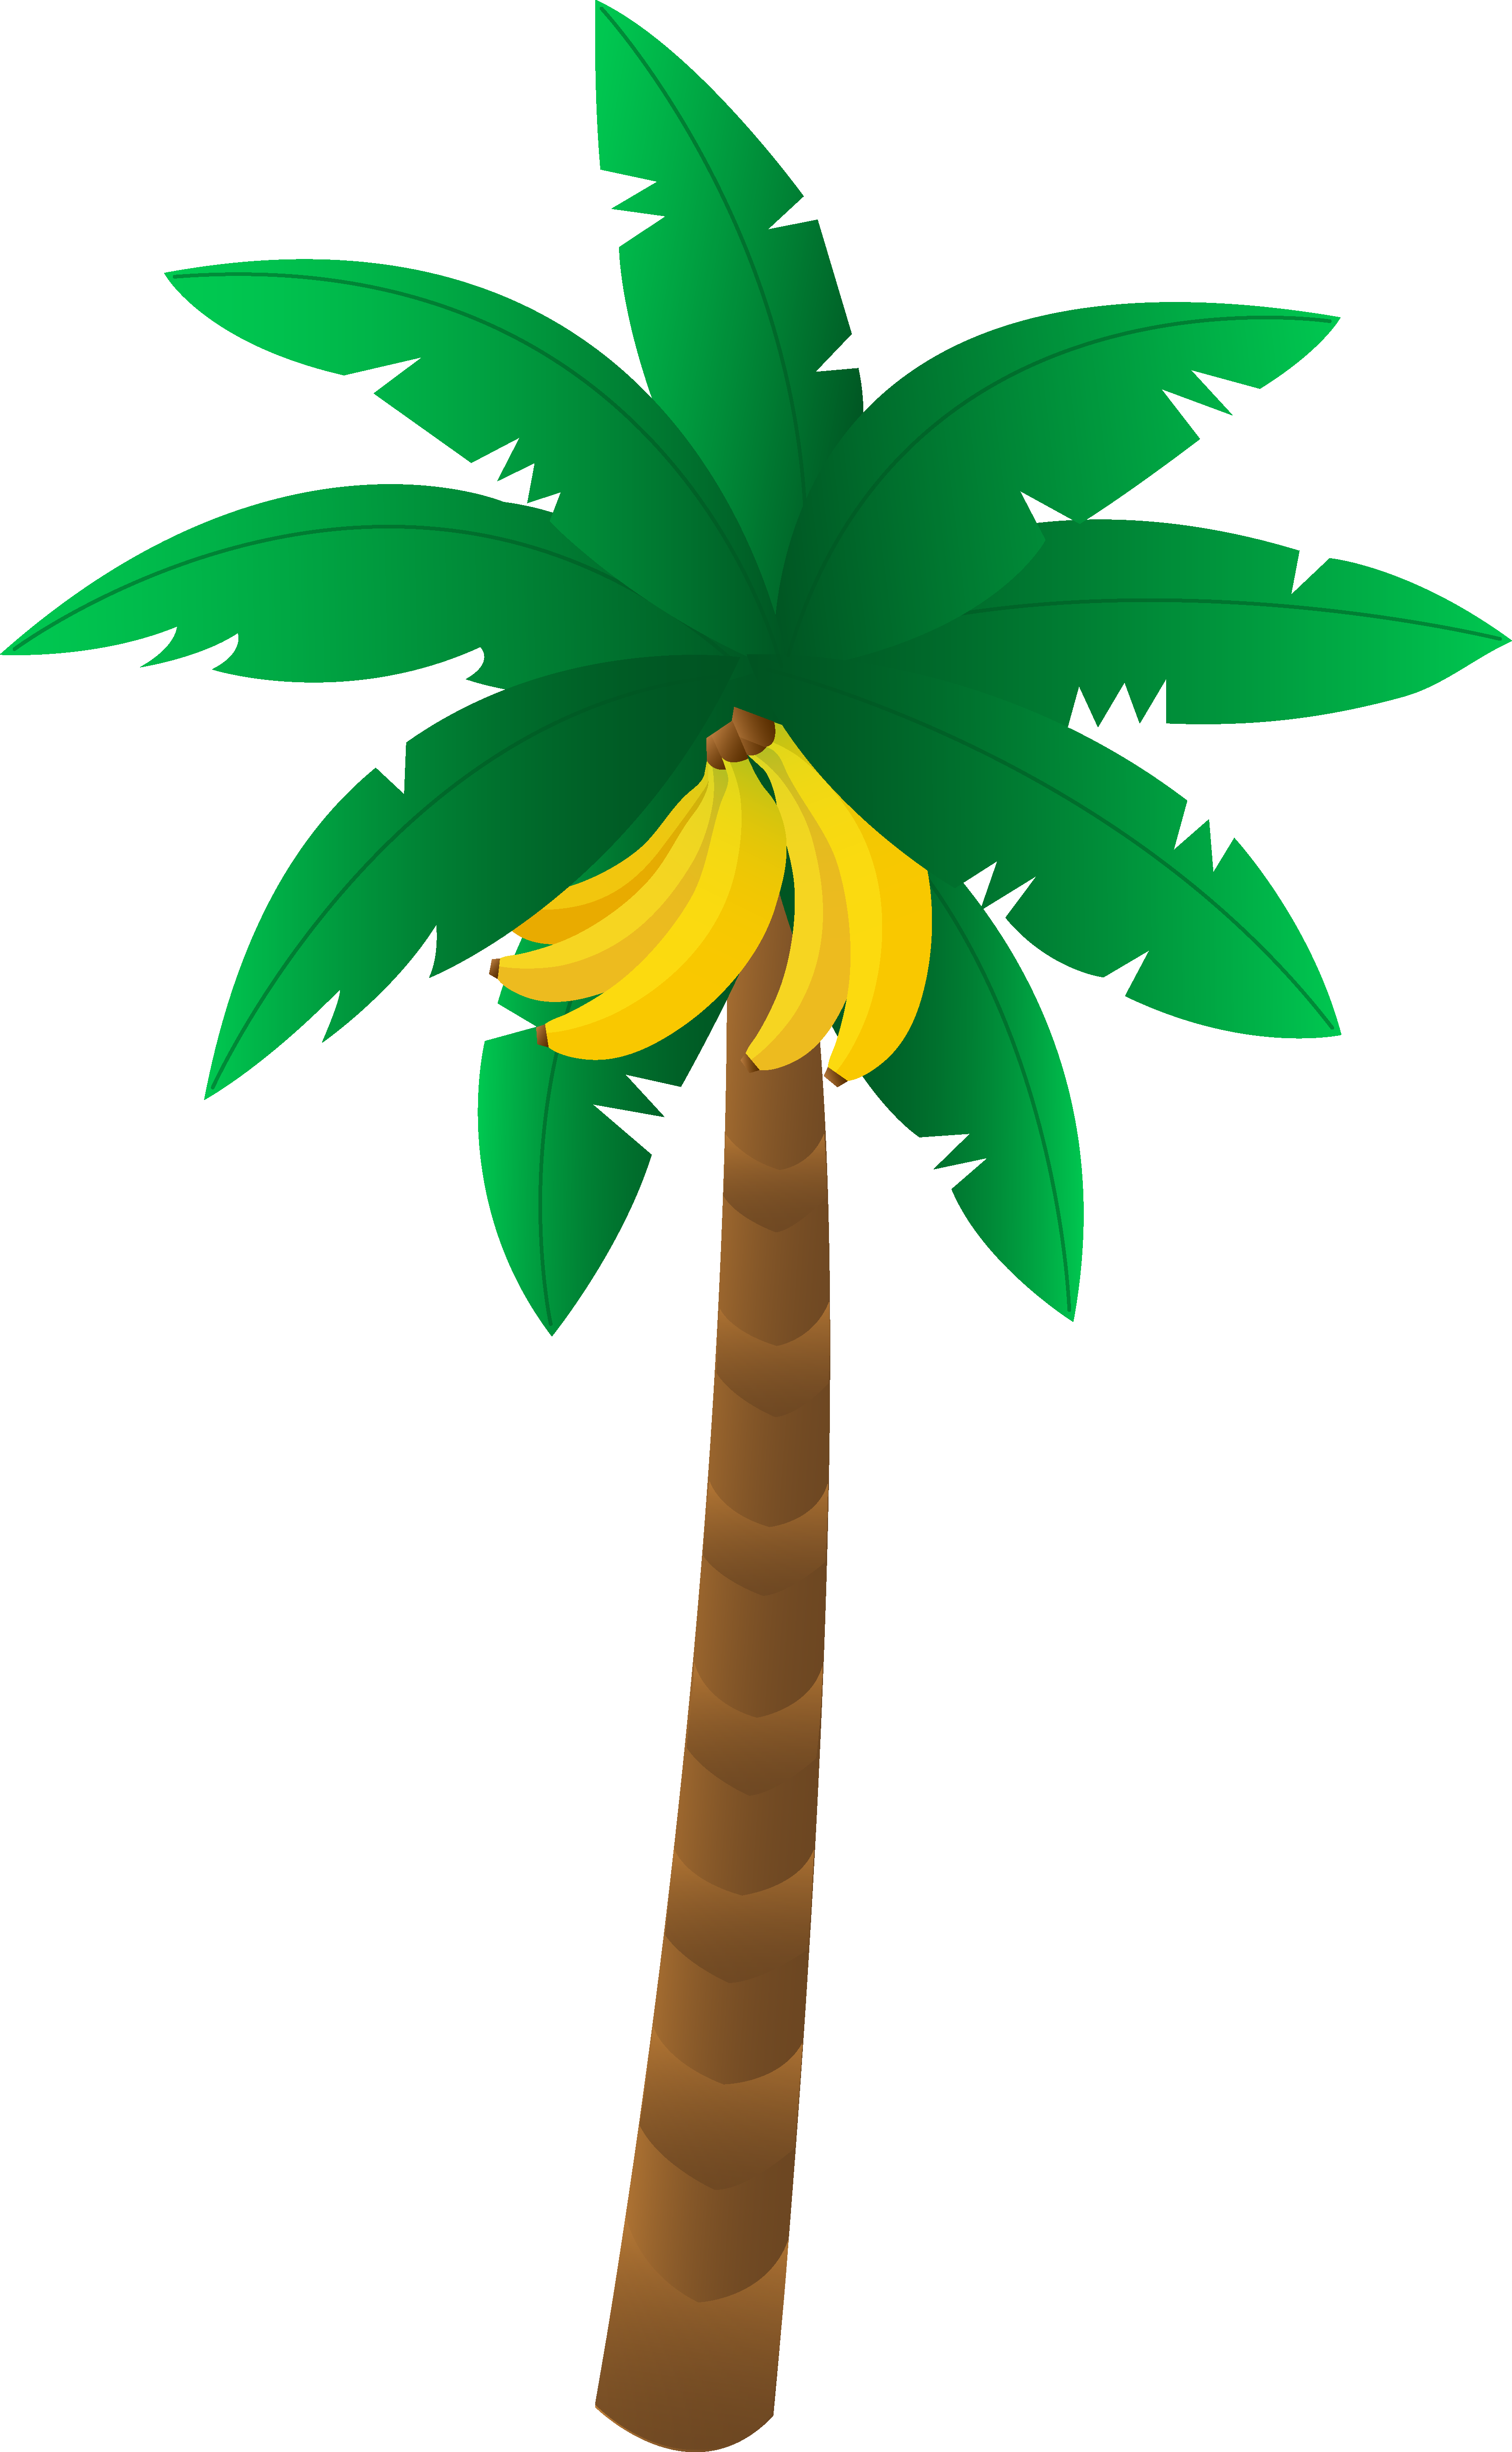 Banana tree images clip art